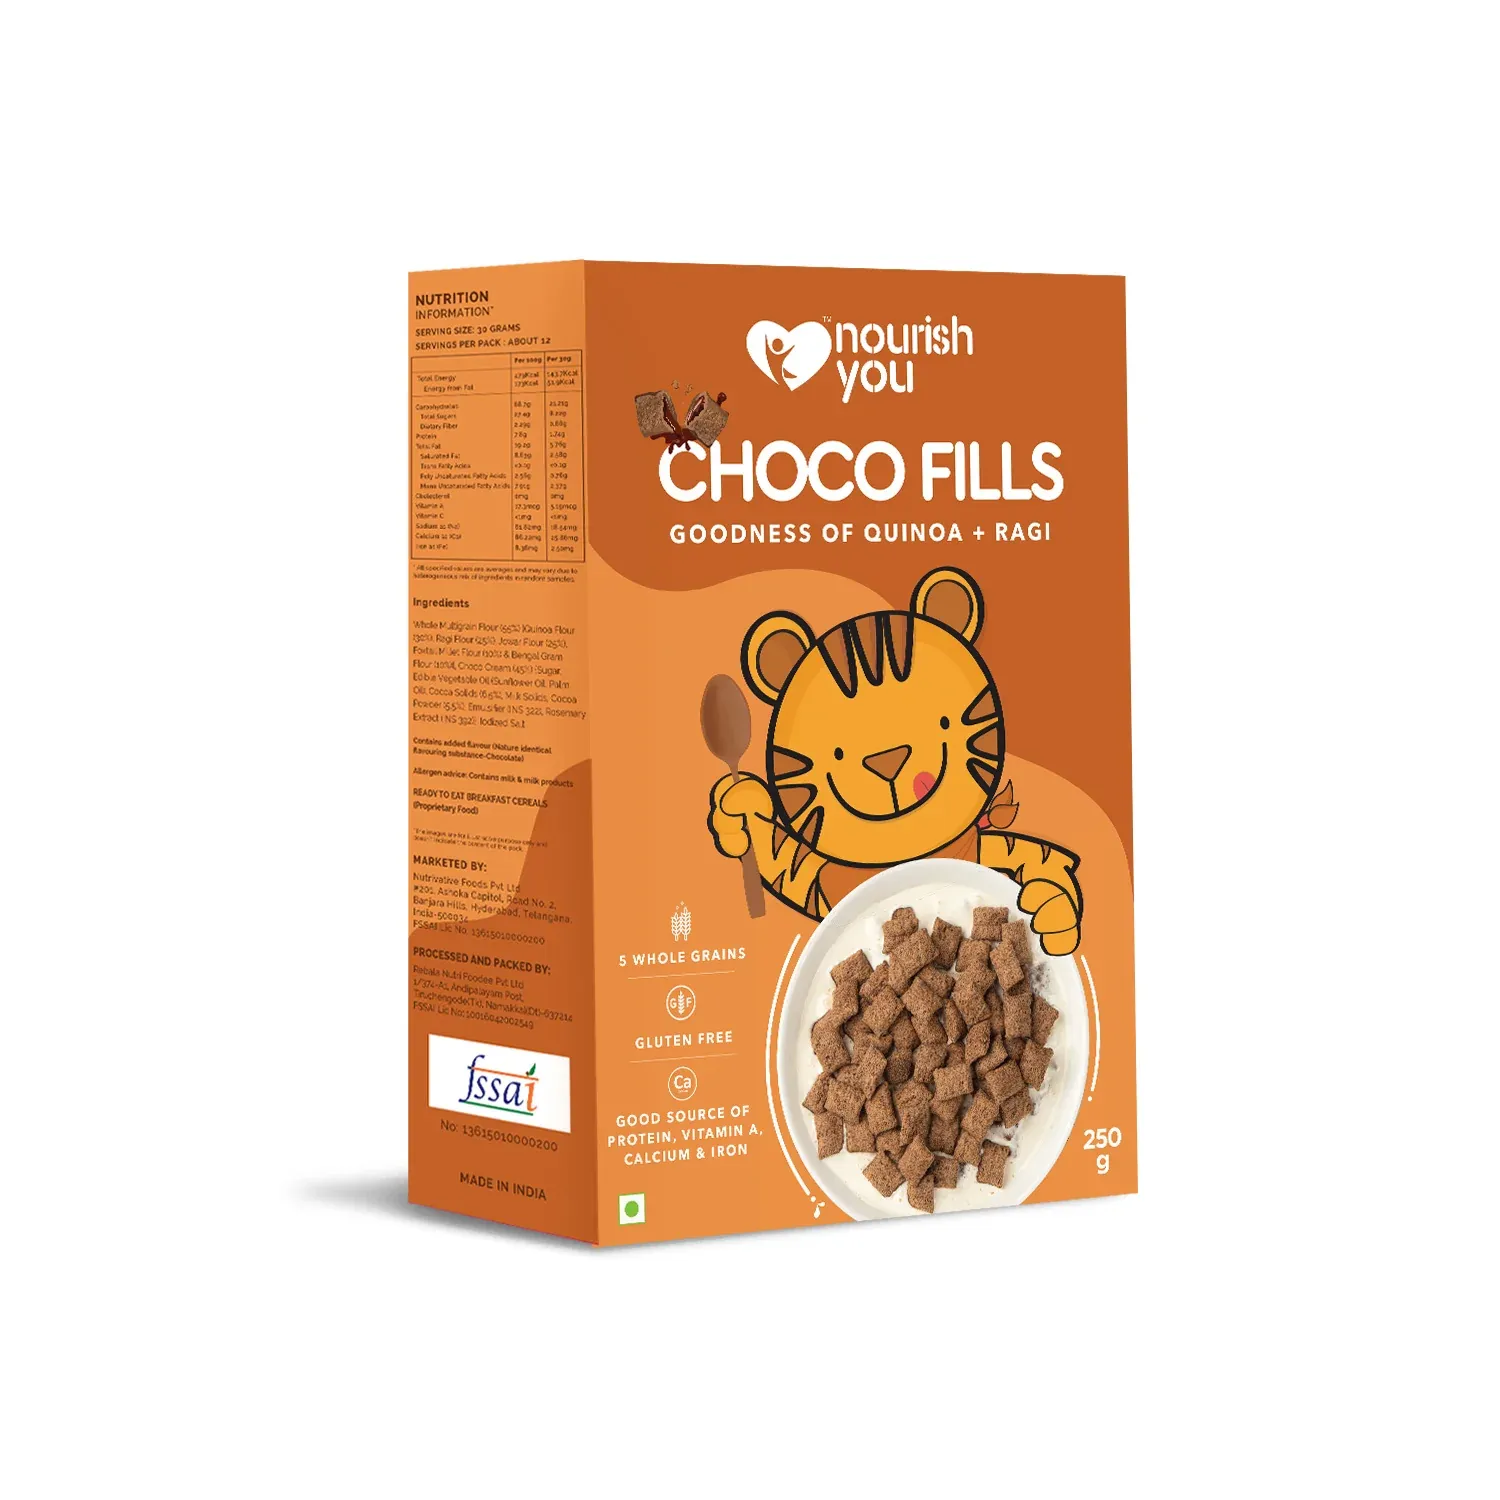 Nourish You Choco Fills With Quinoa + Ragi